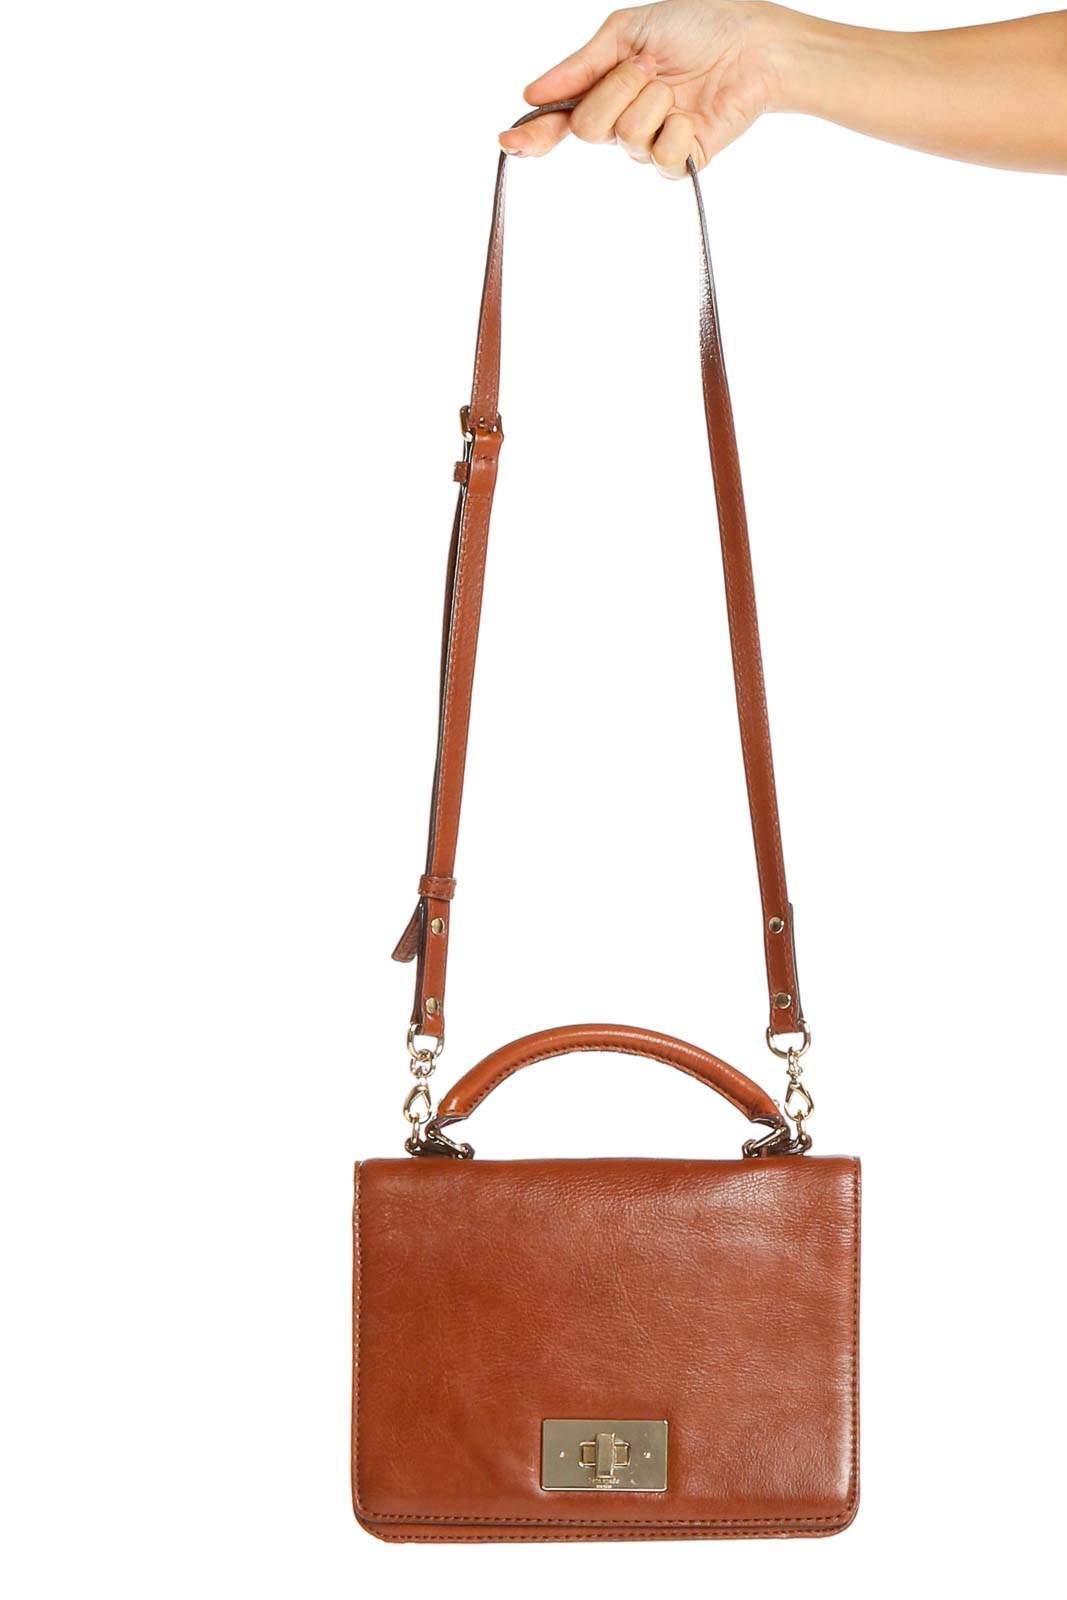 Brown Leather Vintage Crossbody Bag Front